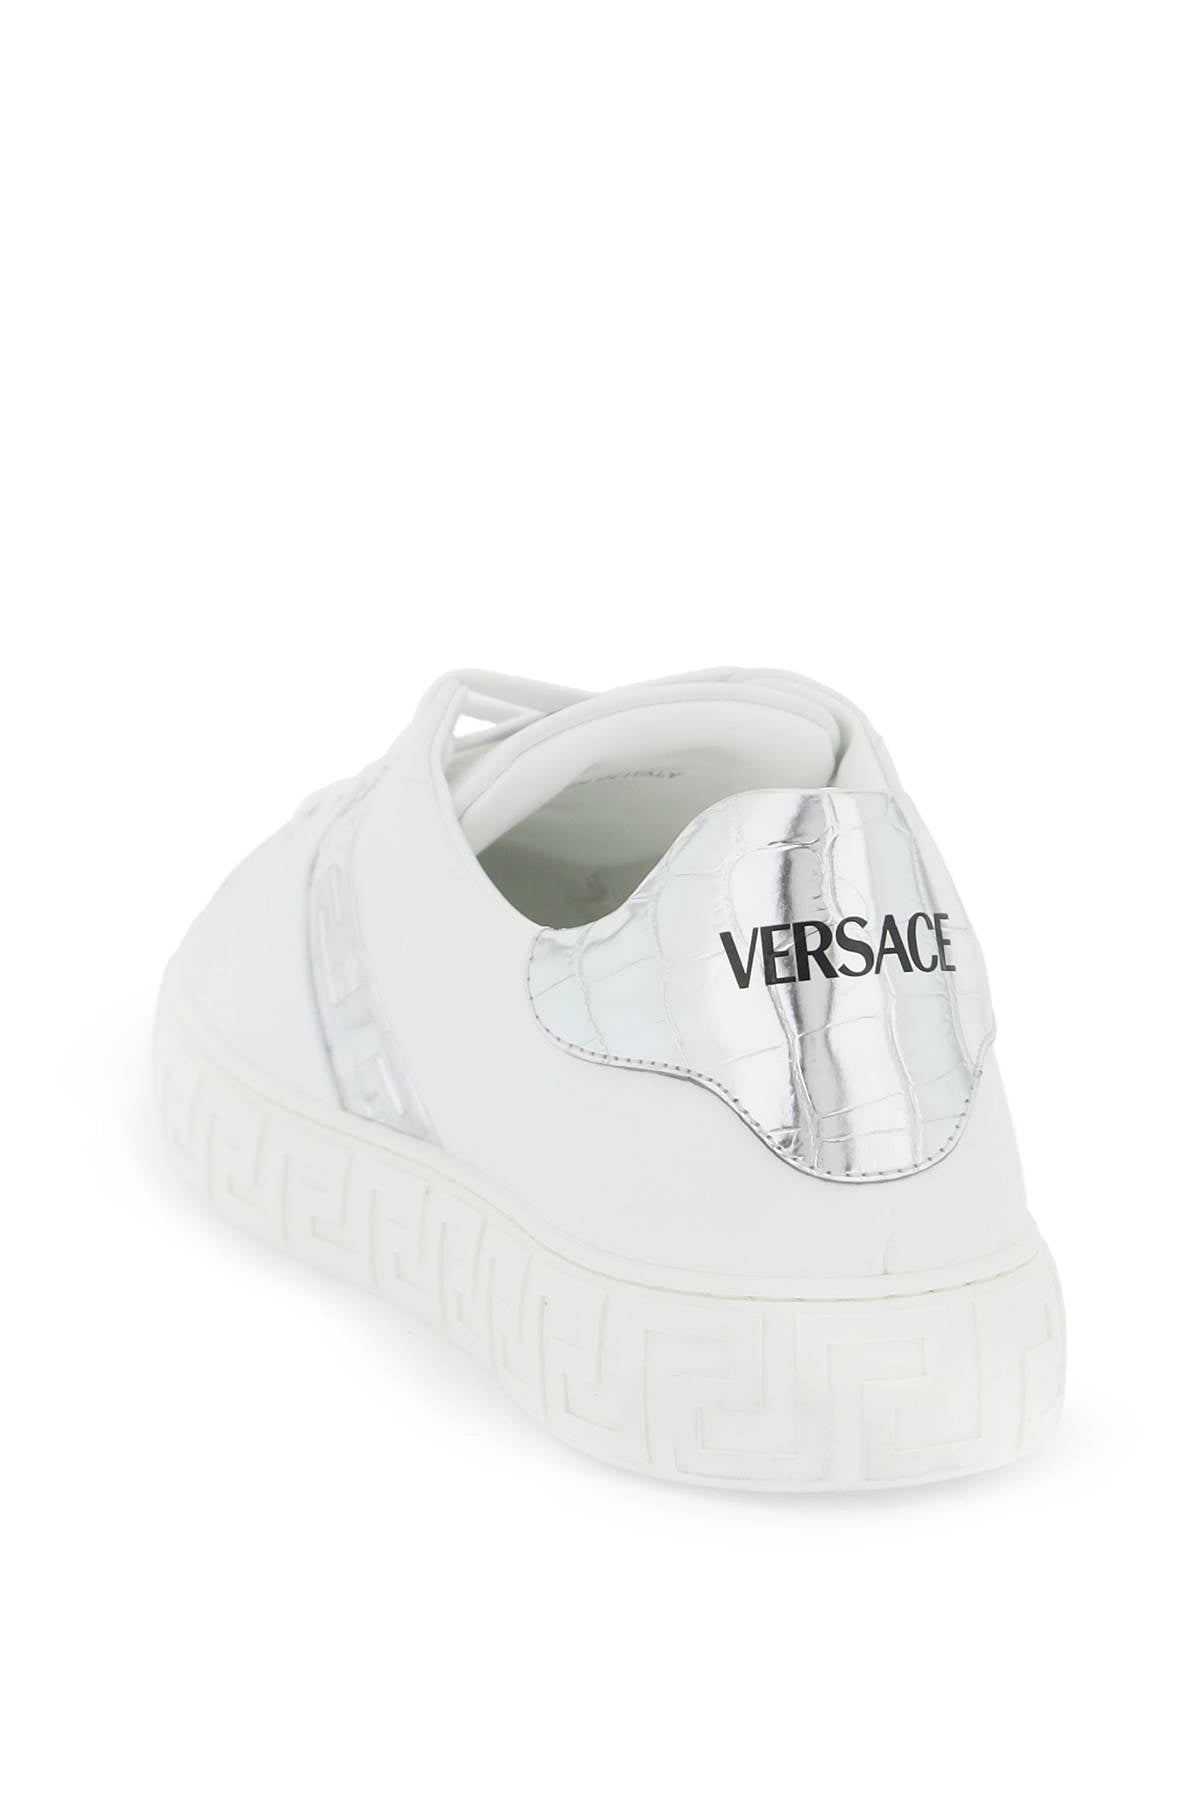 Versace Greek Pattern Sneakers   Silver